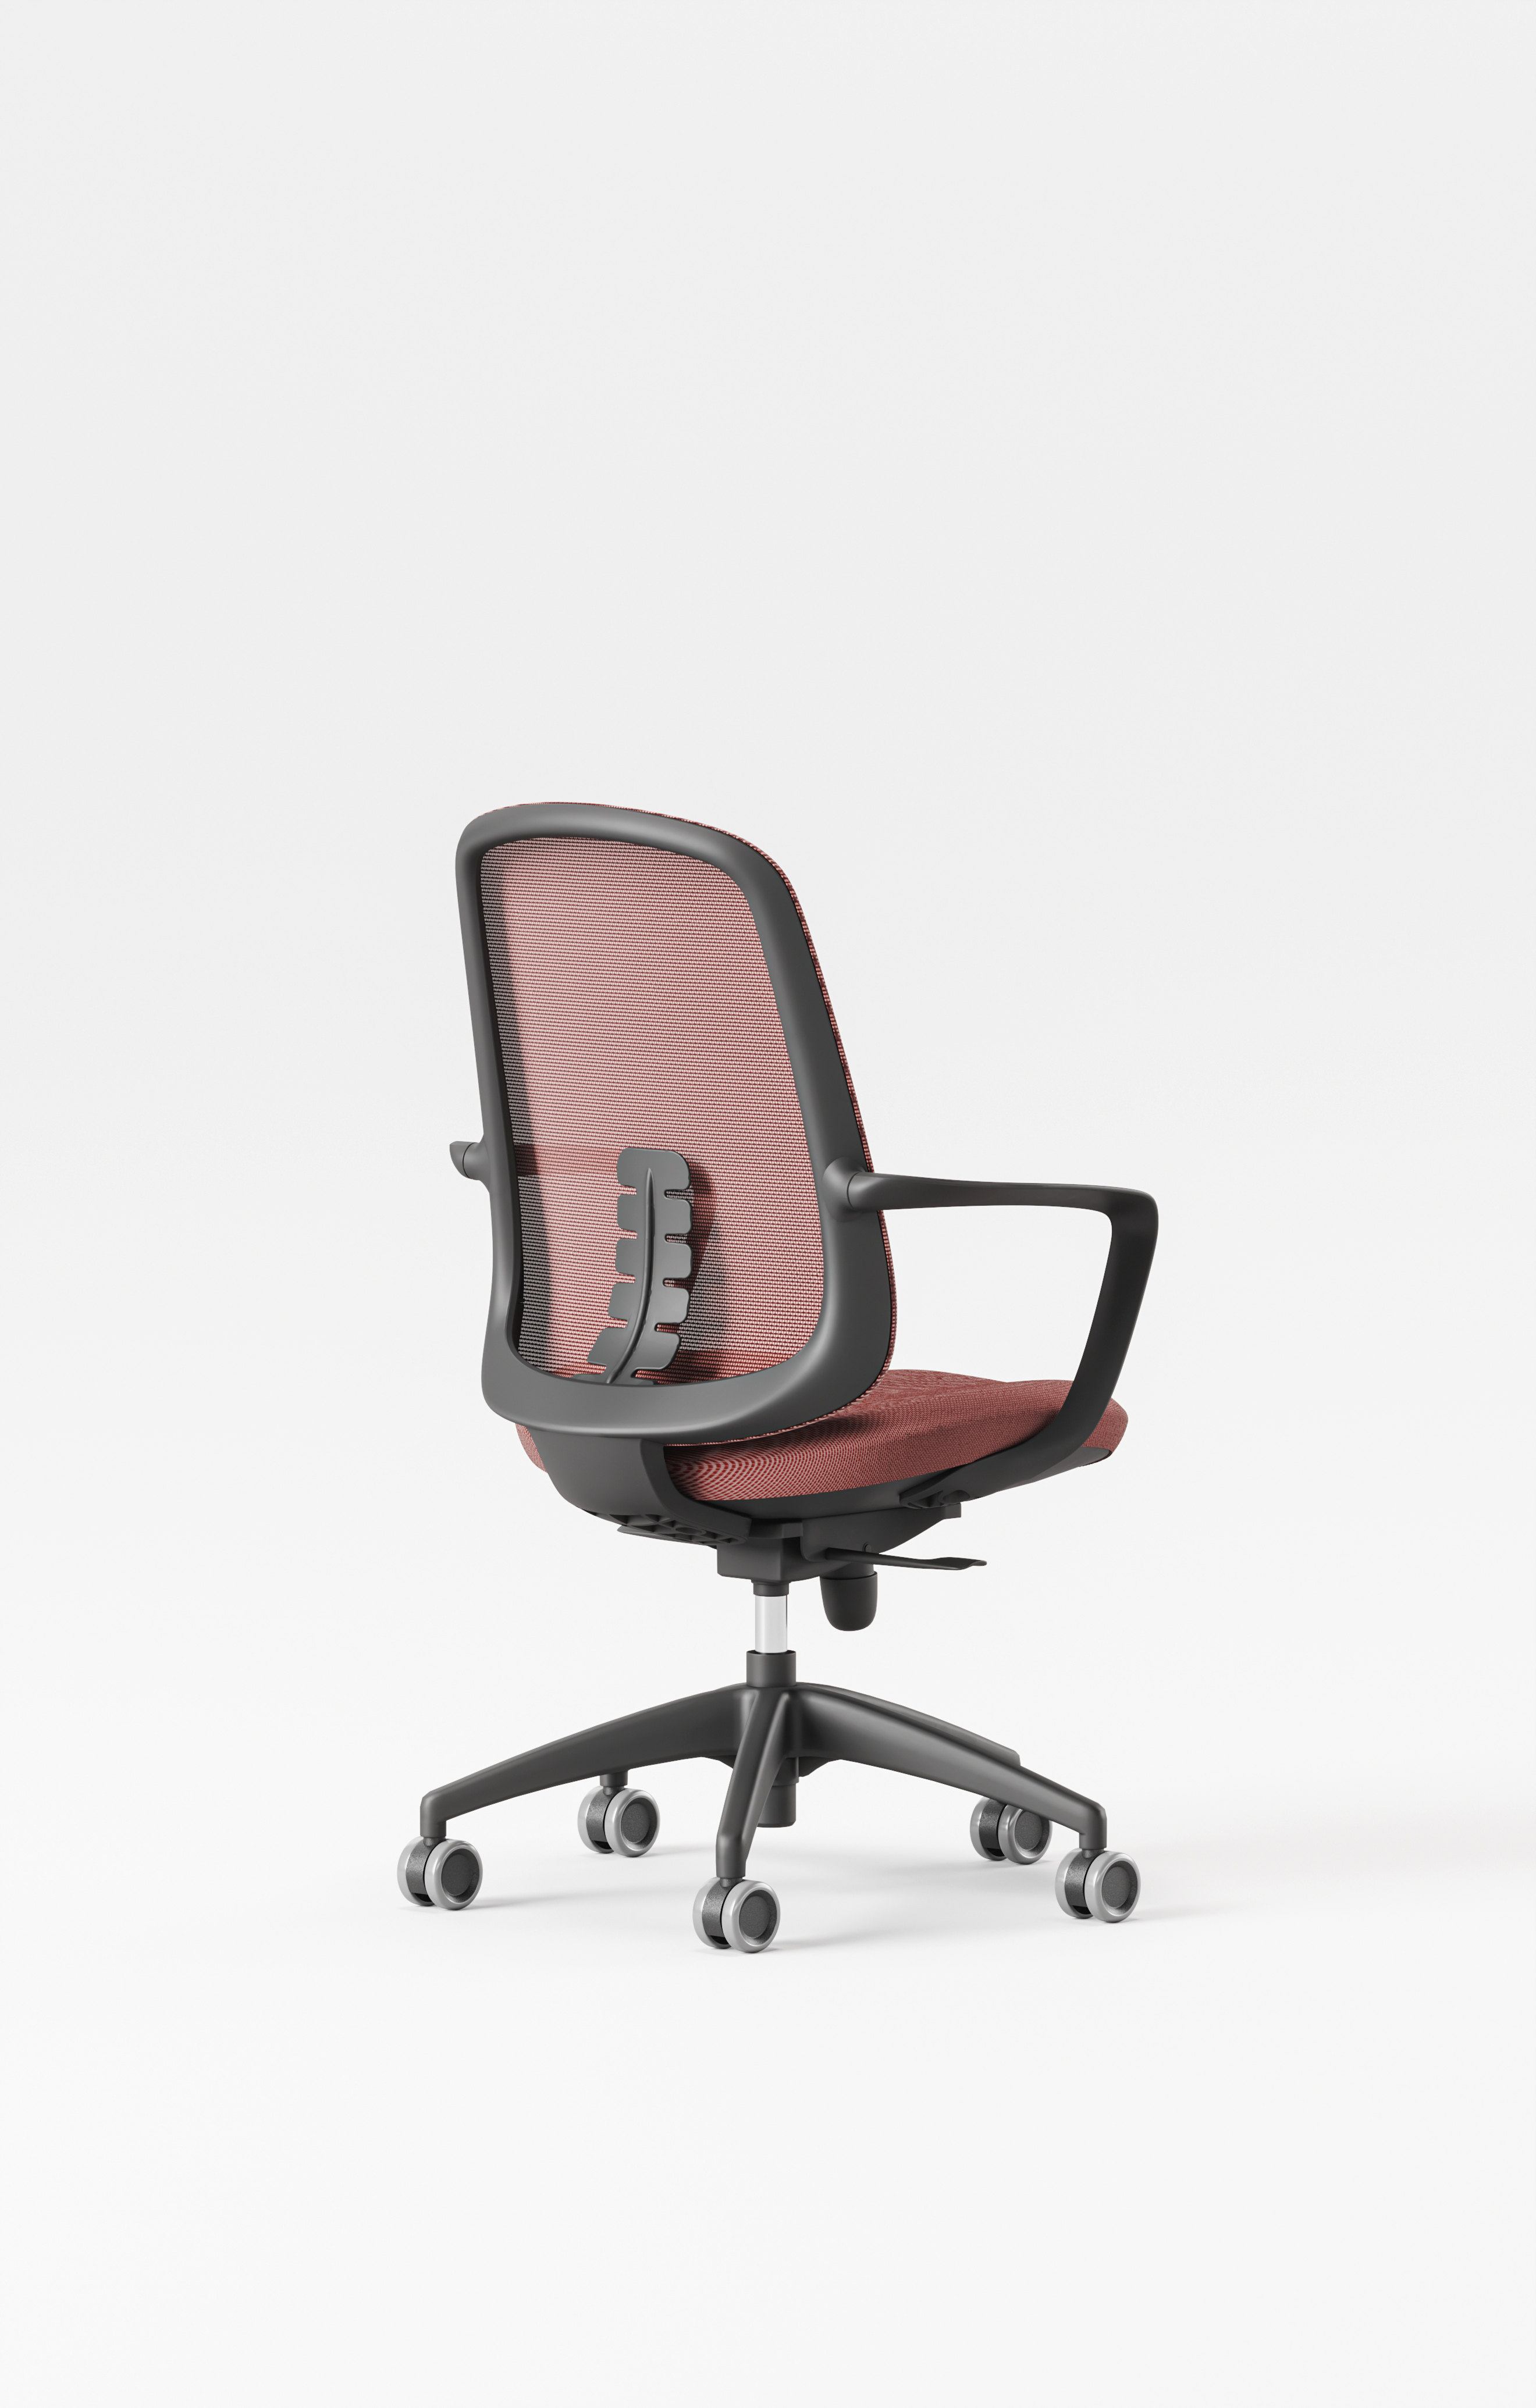 ZUOWE Comfortable Fabric Mid Back Ergonomic Chair